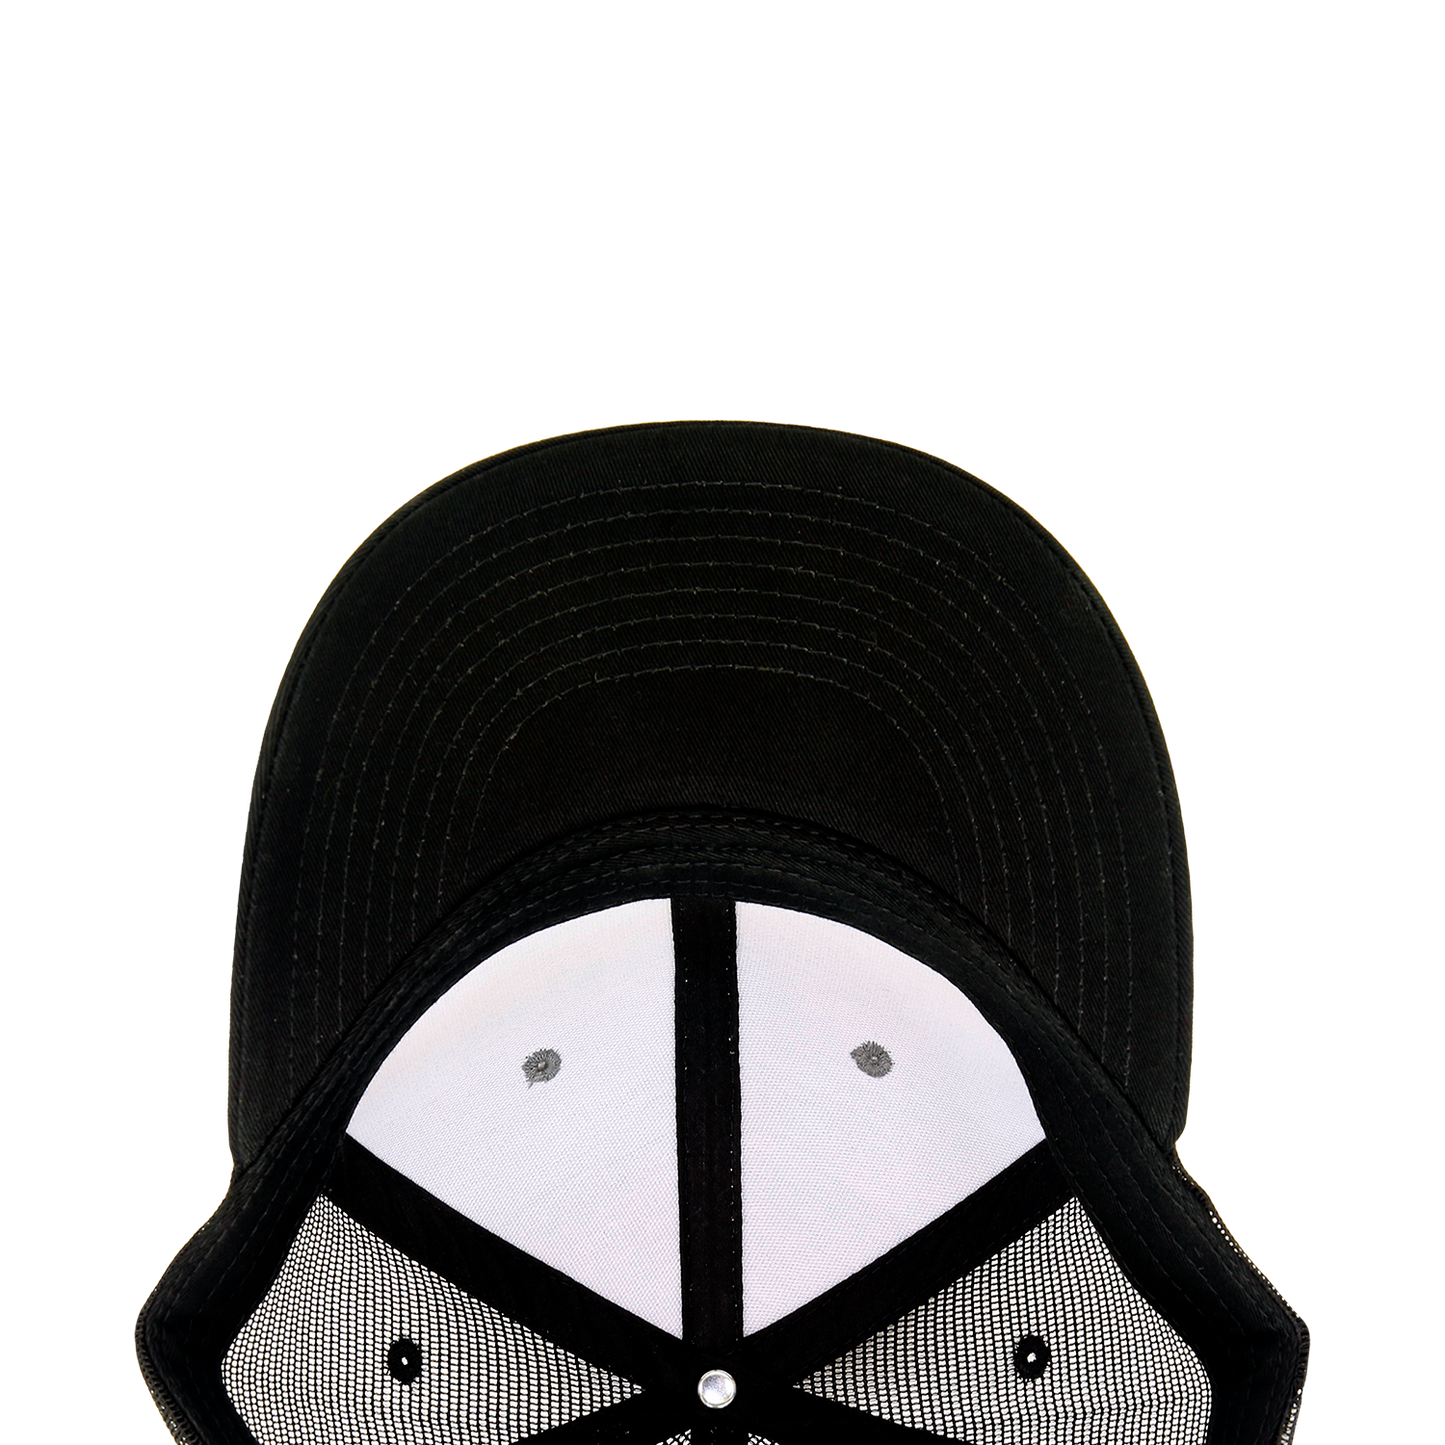 Custom Embroidered Decky 1054 - Camo Curve Bill Trucker Hat, 6 Panel Camo Trucker Cap